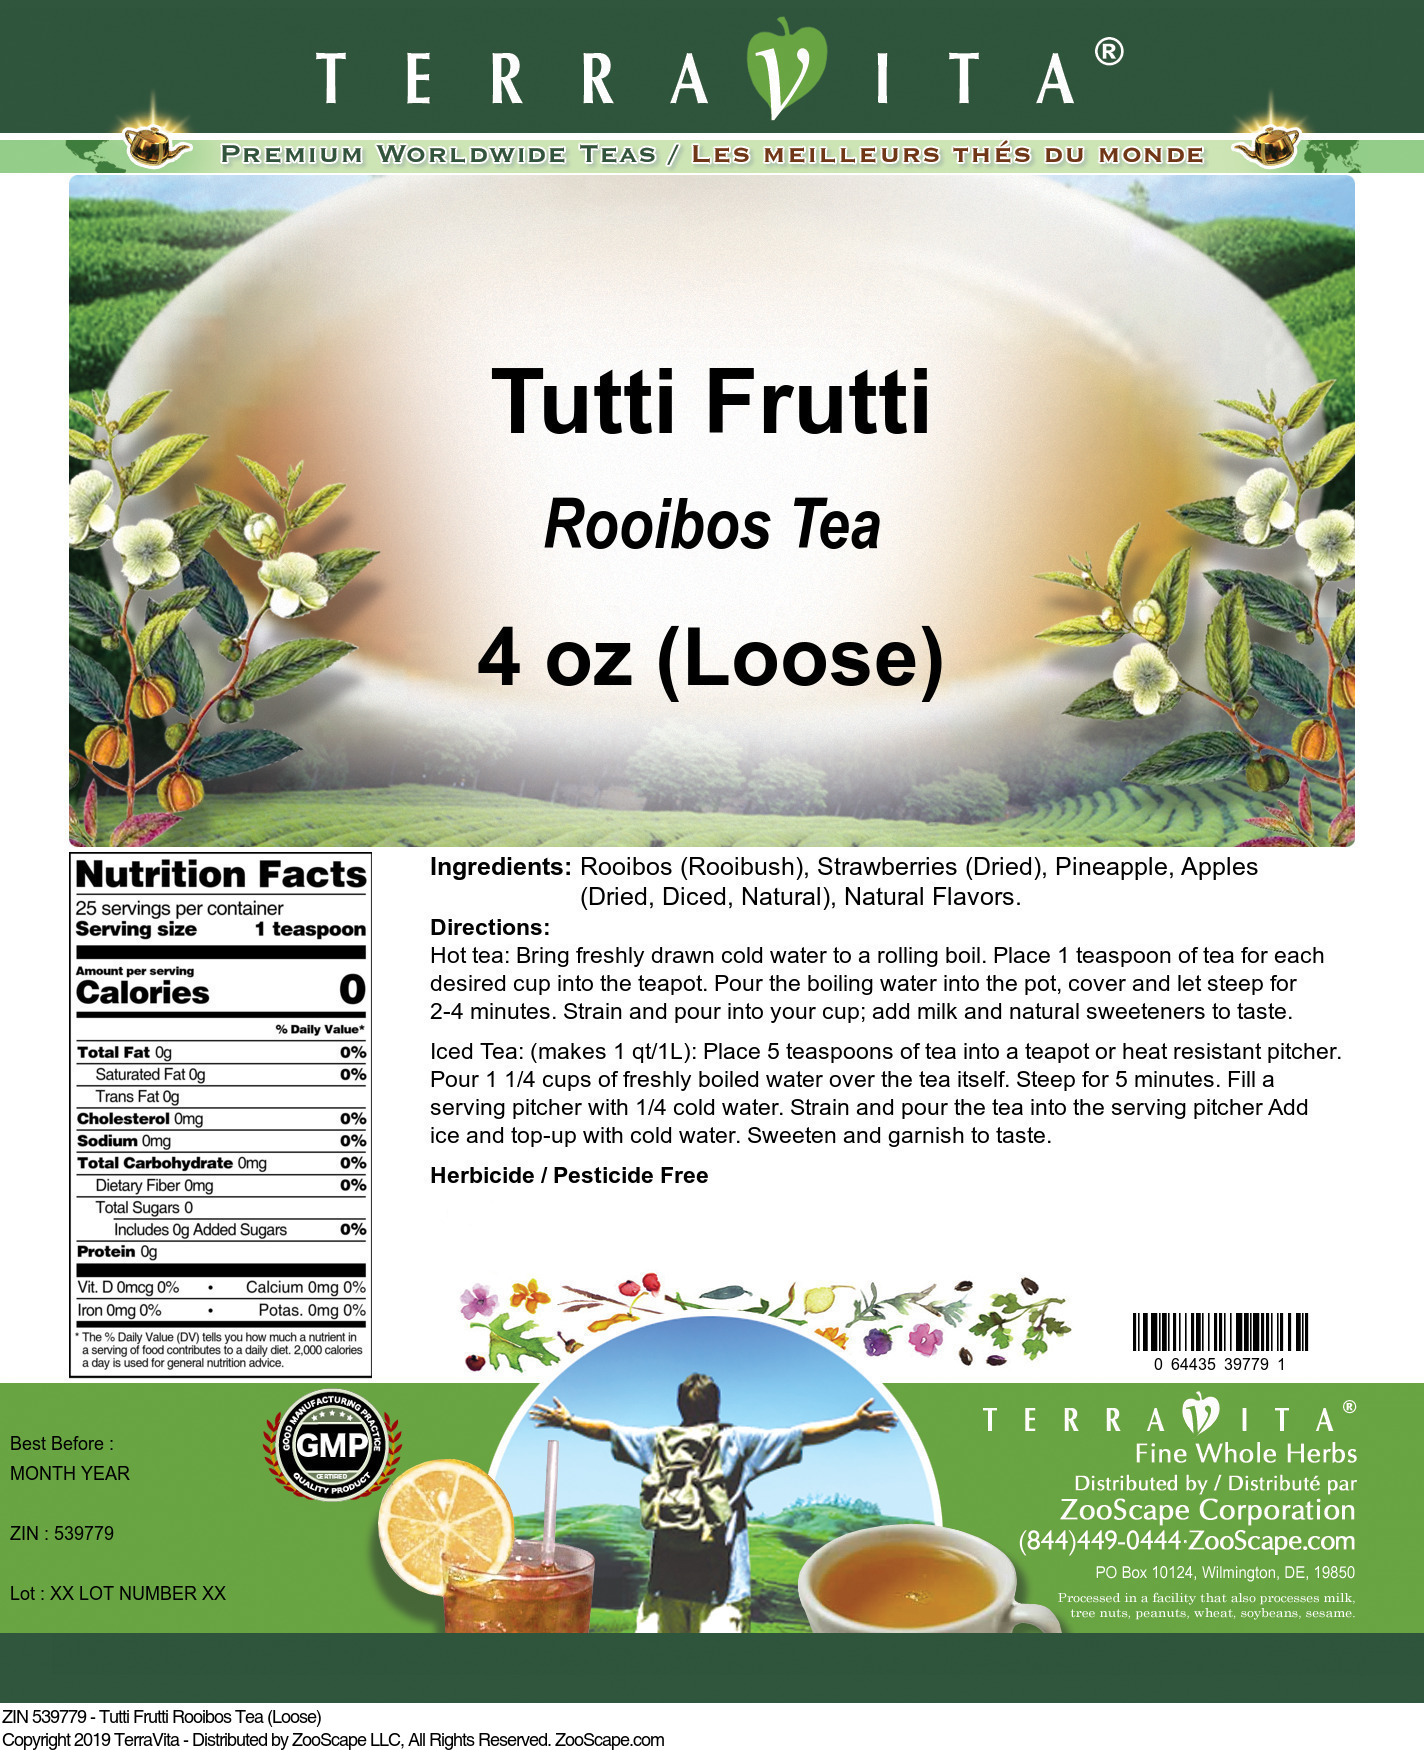 Tutti Frutti Rooibos Tea (Loose) - Label